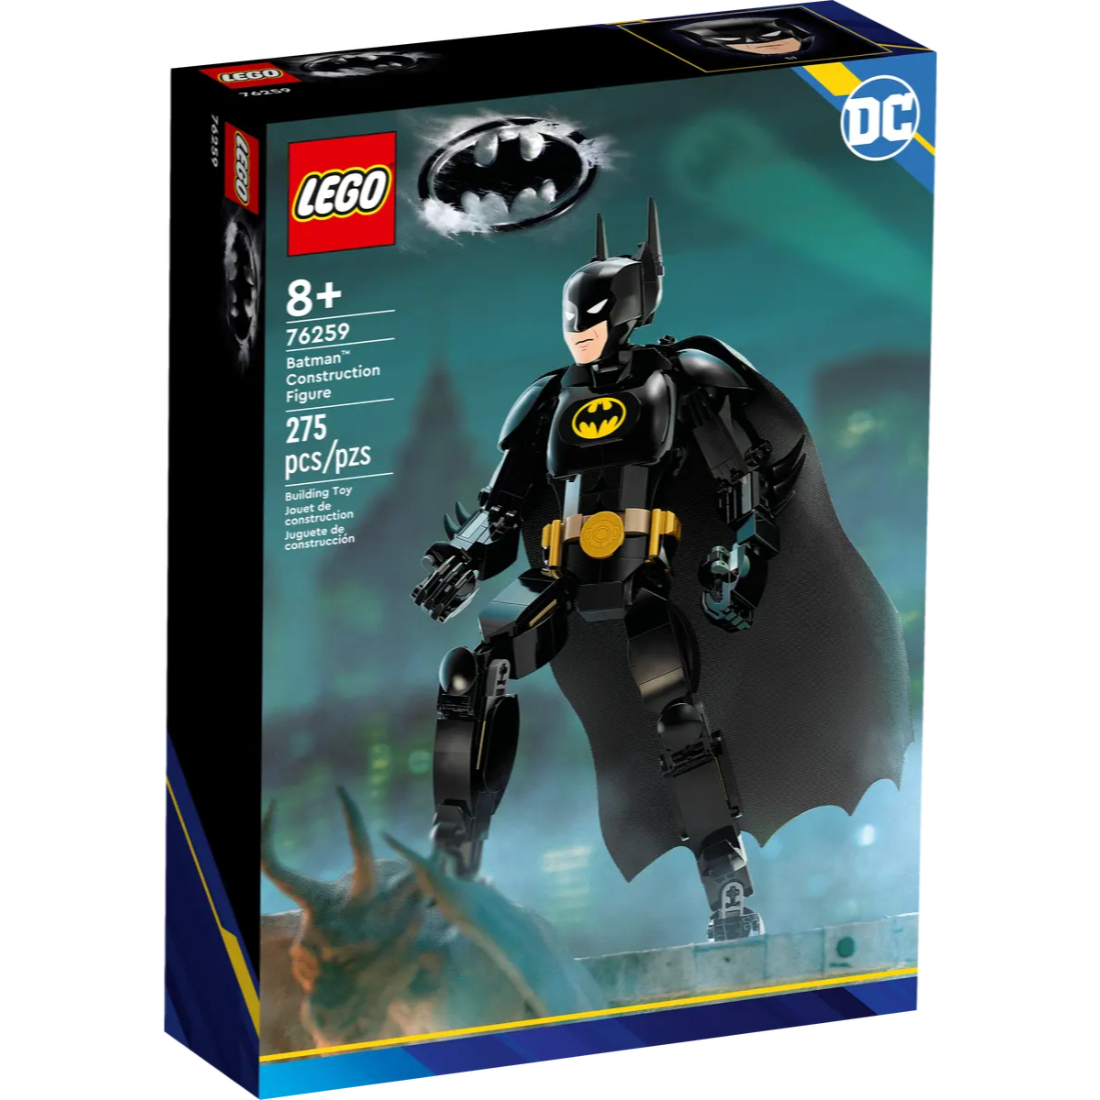 BRICK PAPA / LEGO 76259 Batman™ Construction Figure